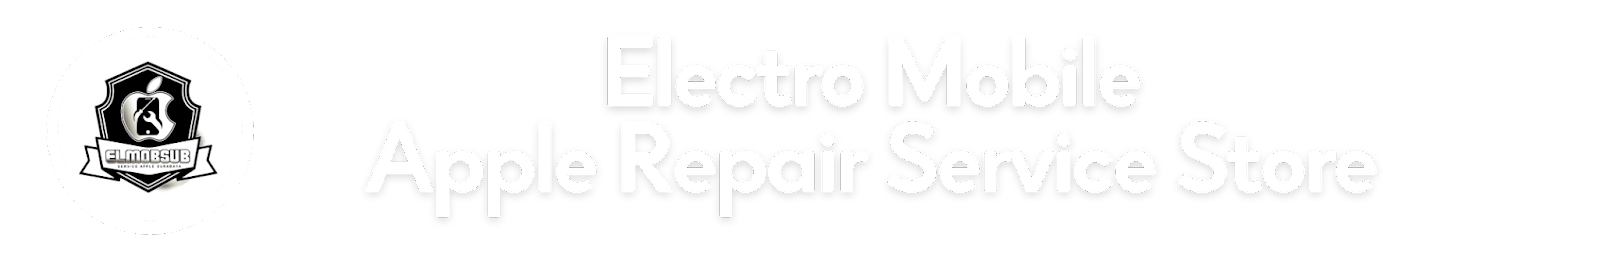 Apple Repair Service Store Surabaya